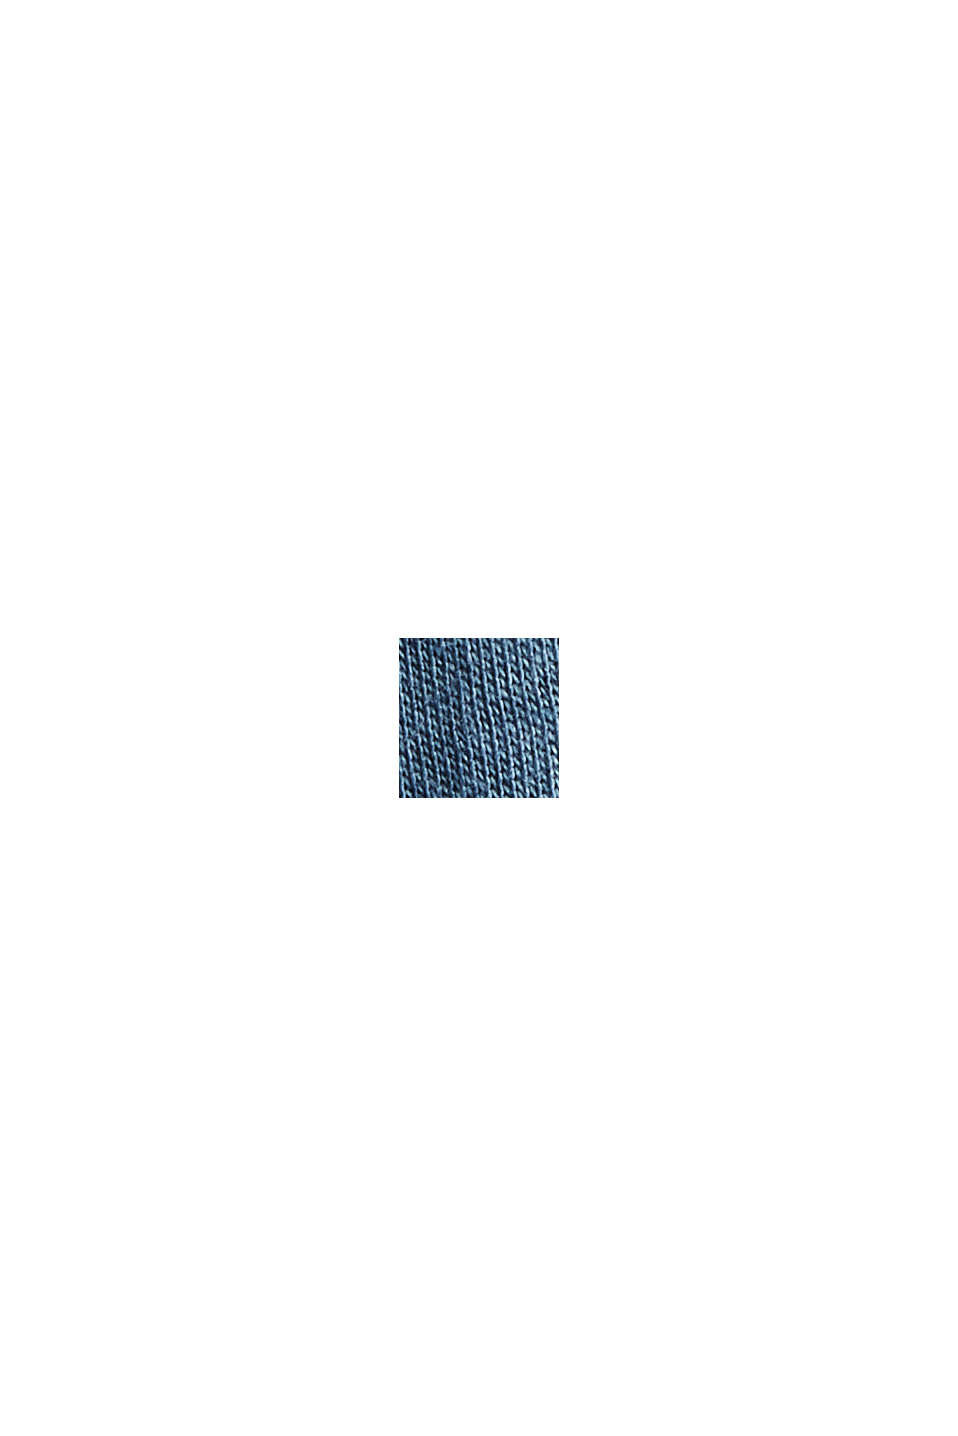 CURVY långärmad tröja med polokrage, TENCEL™, GREY BLUE, swatch